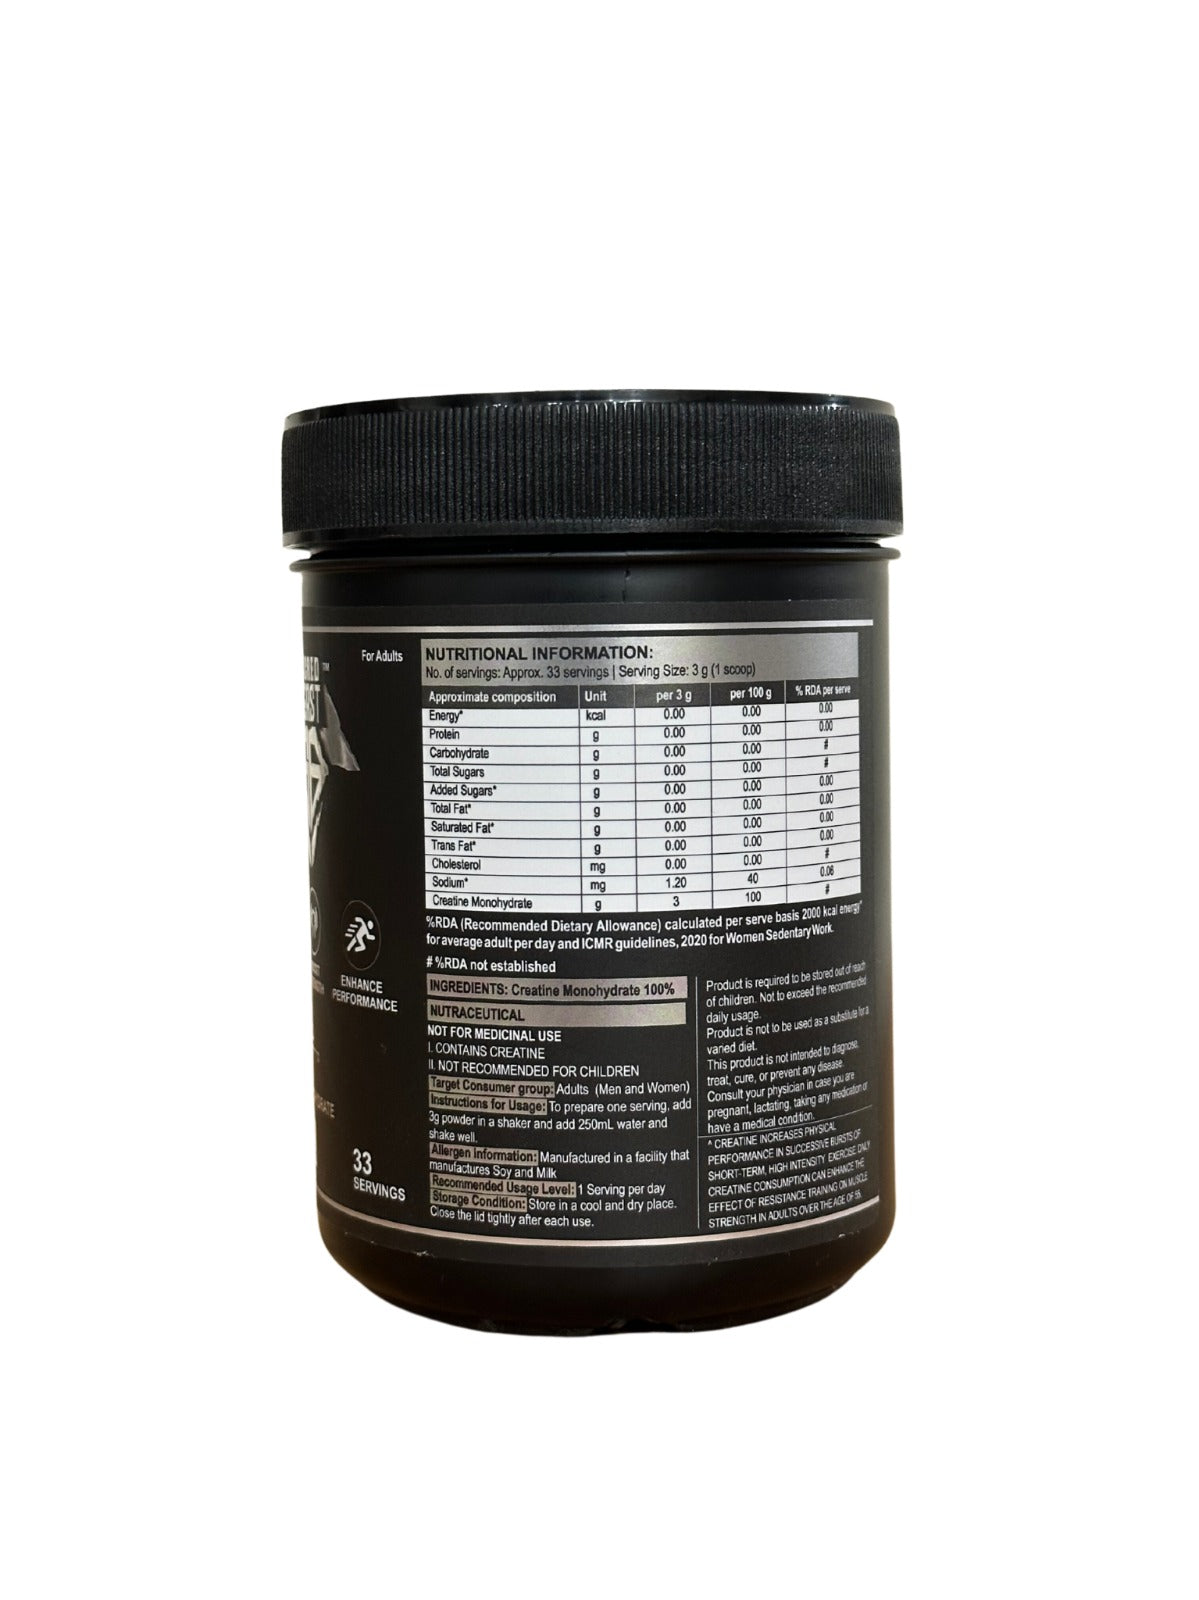 Sacred Beast Micronized Creatine Powder - 250 Gram, 83 Serves, Unflavored, 3g of 100% Creatine Monohydrate per serve, Eurofin Lab Tested